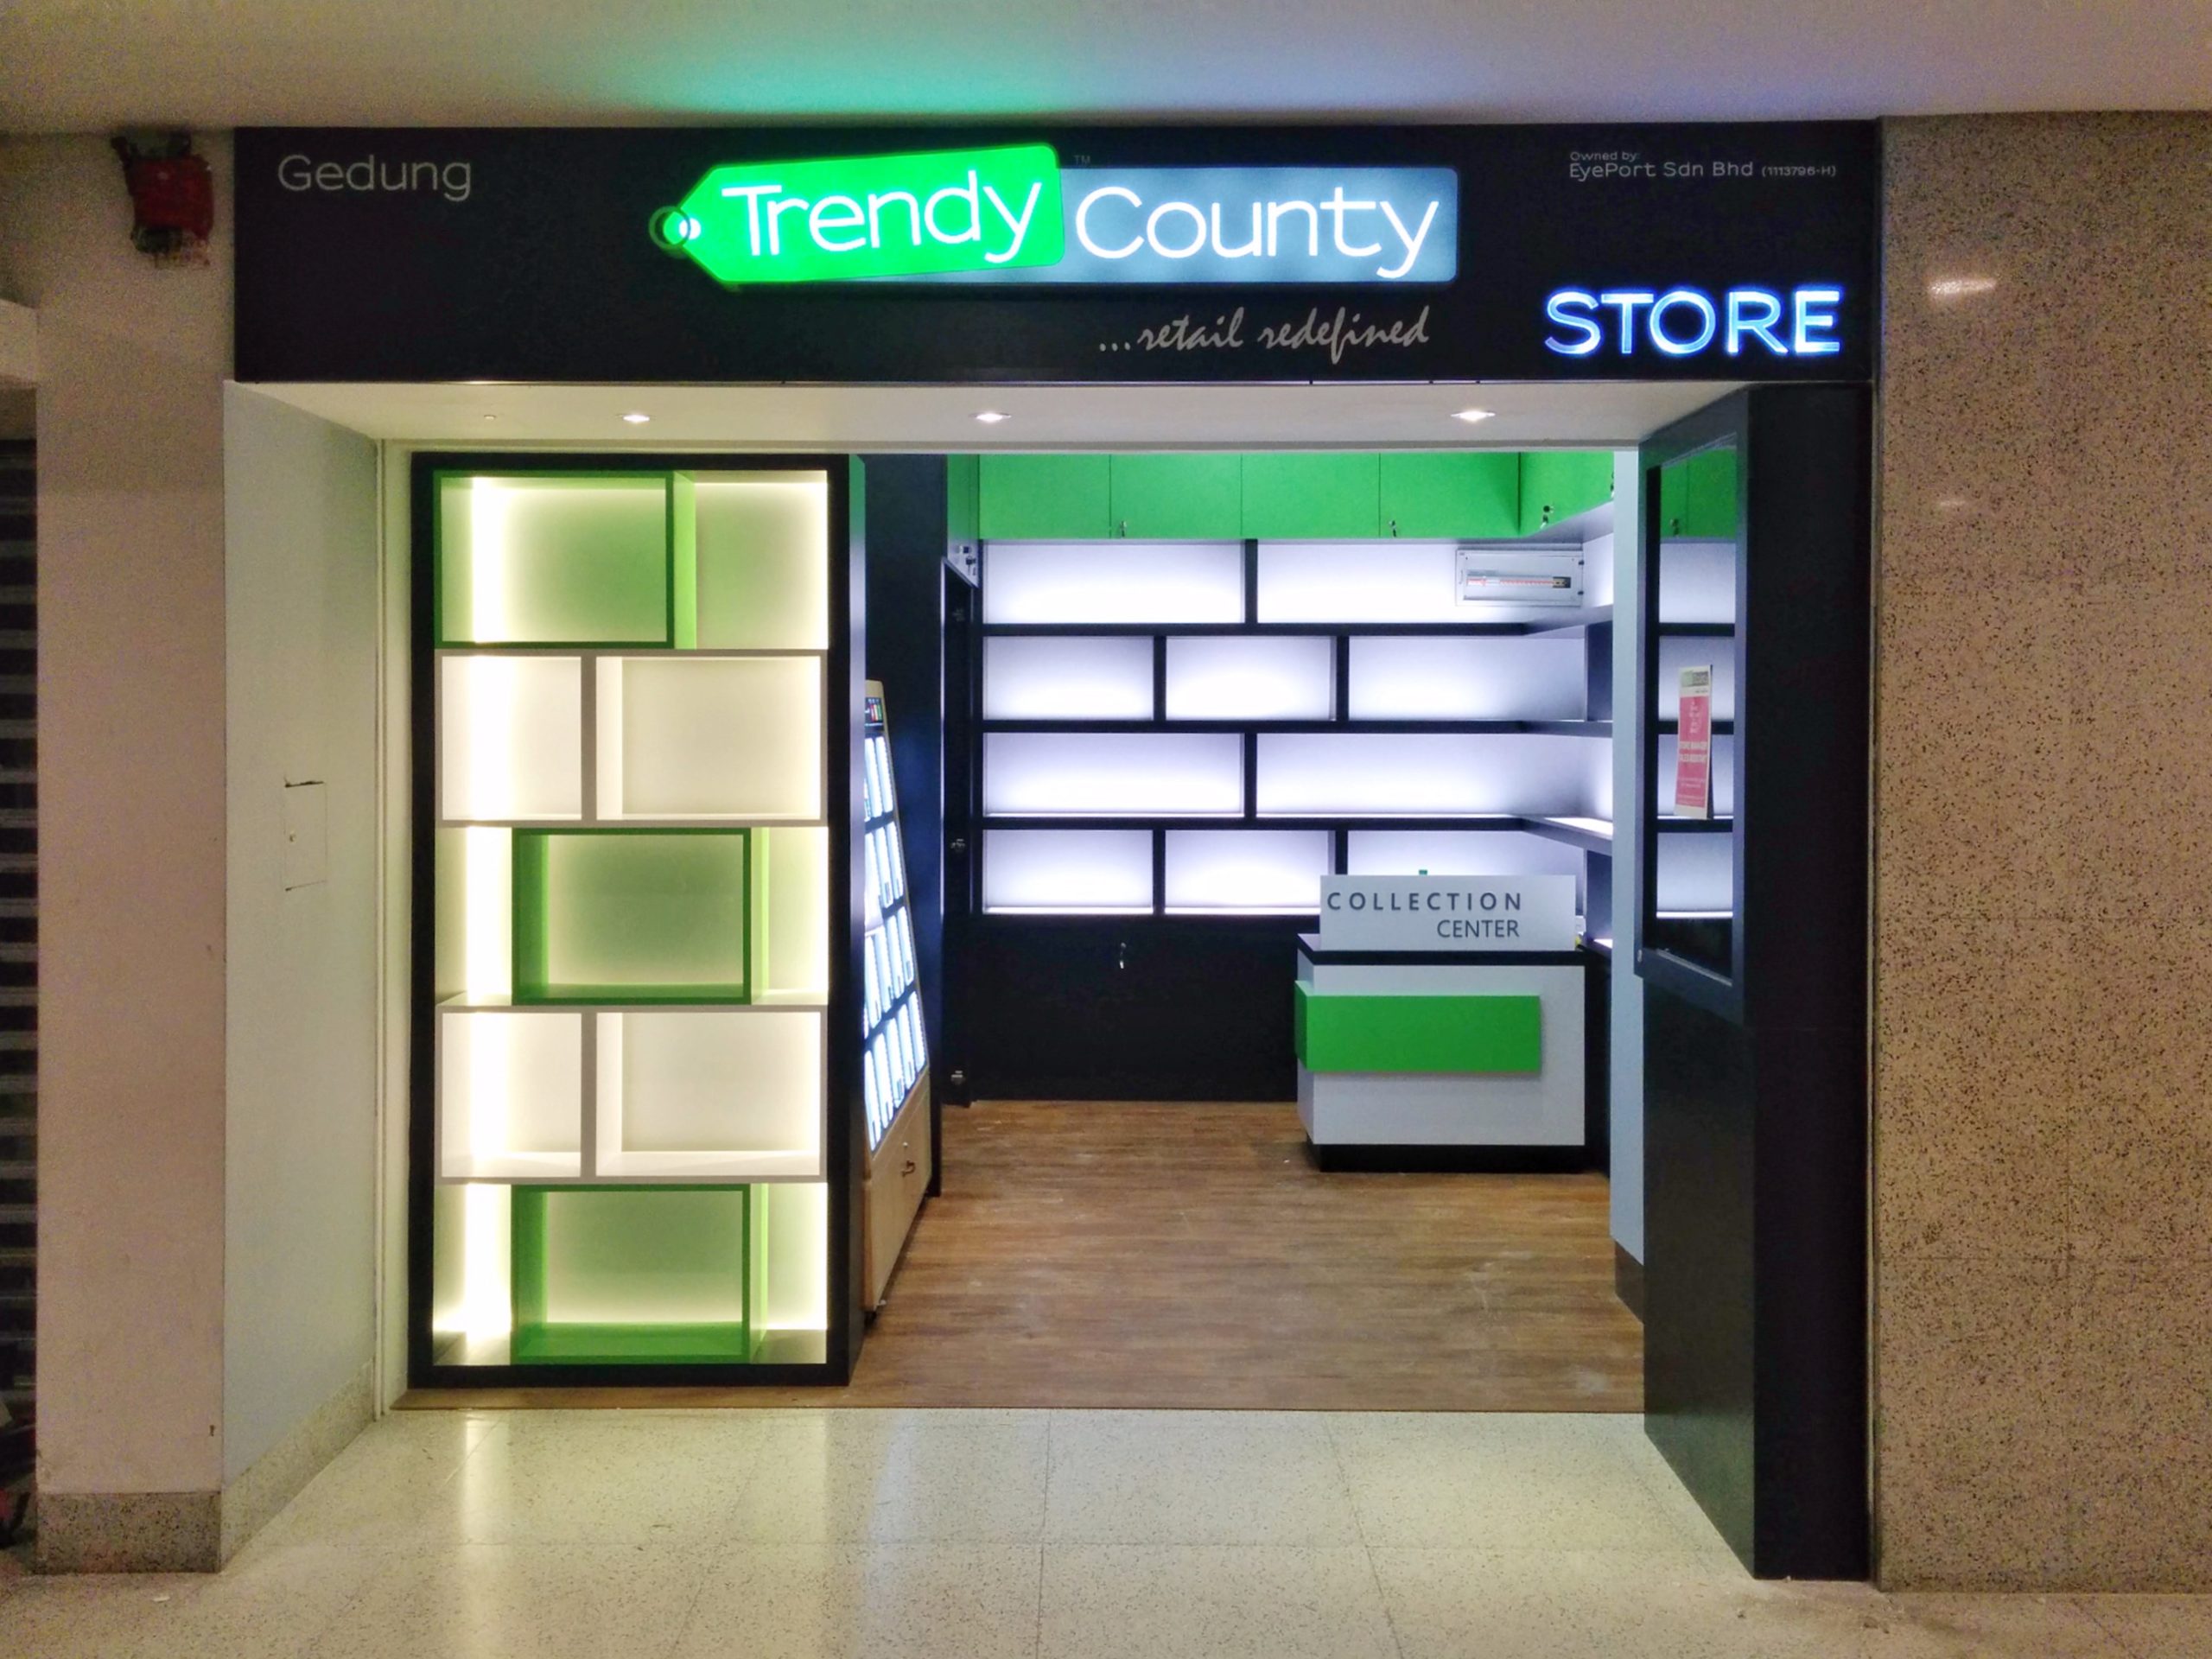 Retail - trendy county - facade 1